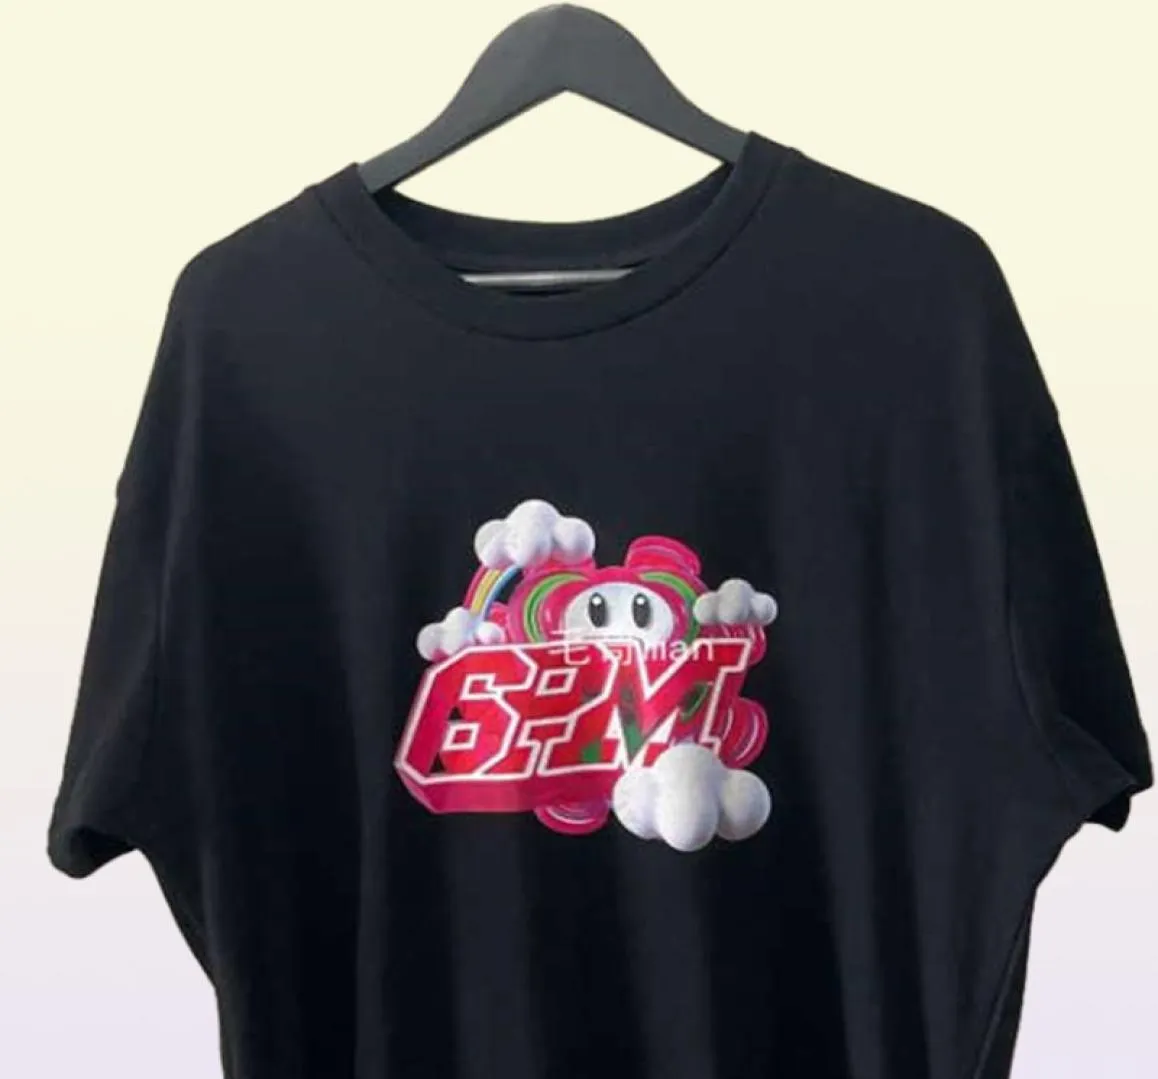 6PM SEASON Tshirt Men Women 3D Cartoon Tops Tees 6PMSEASON T Shirt The Quality 100 Cotton Tees X07267510332